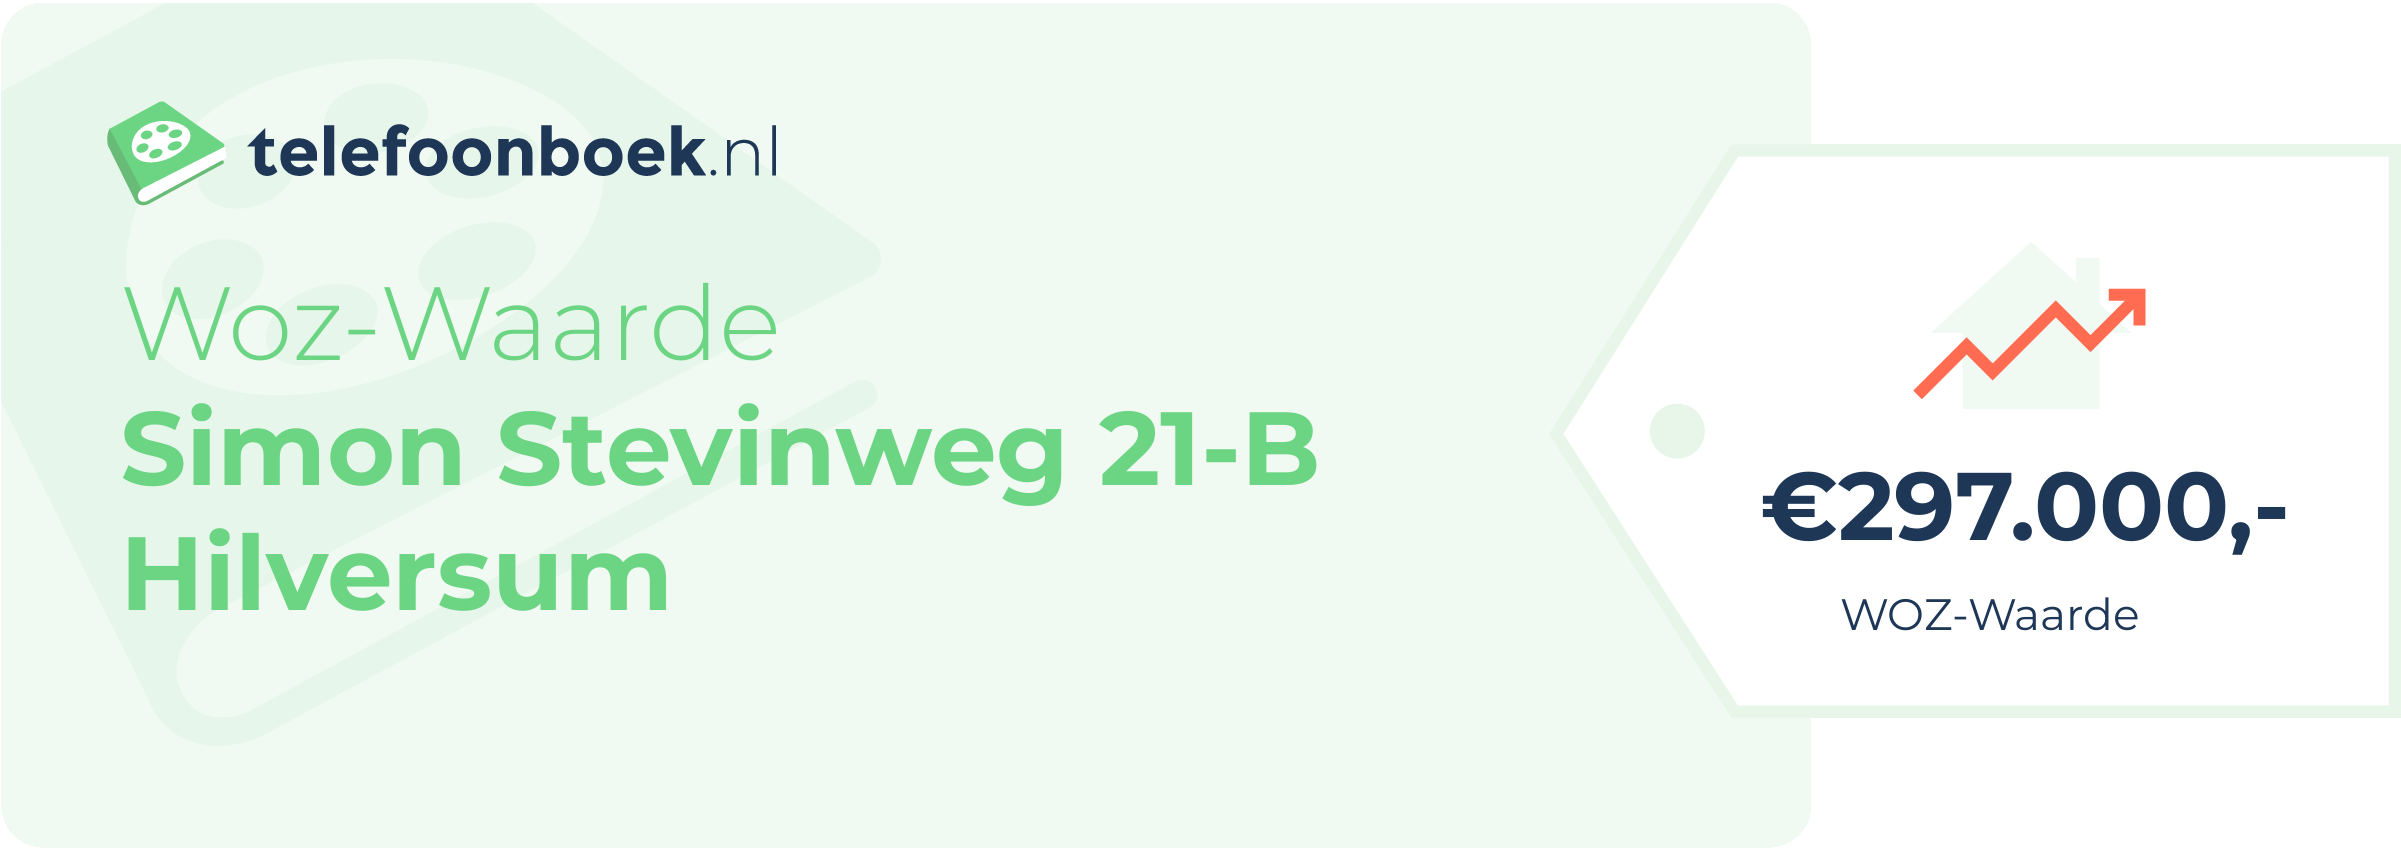 WOZ-waarde Simon Stevinweg 21-B Hilversum